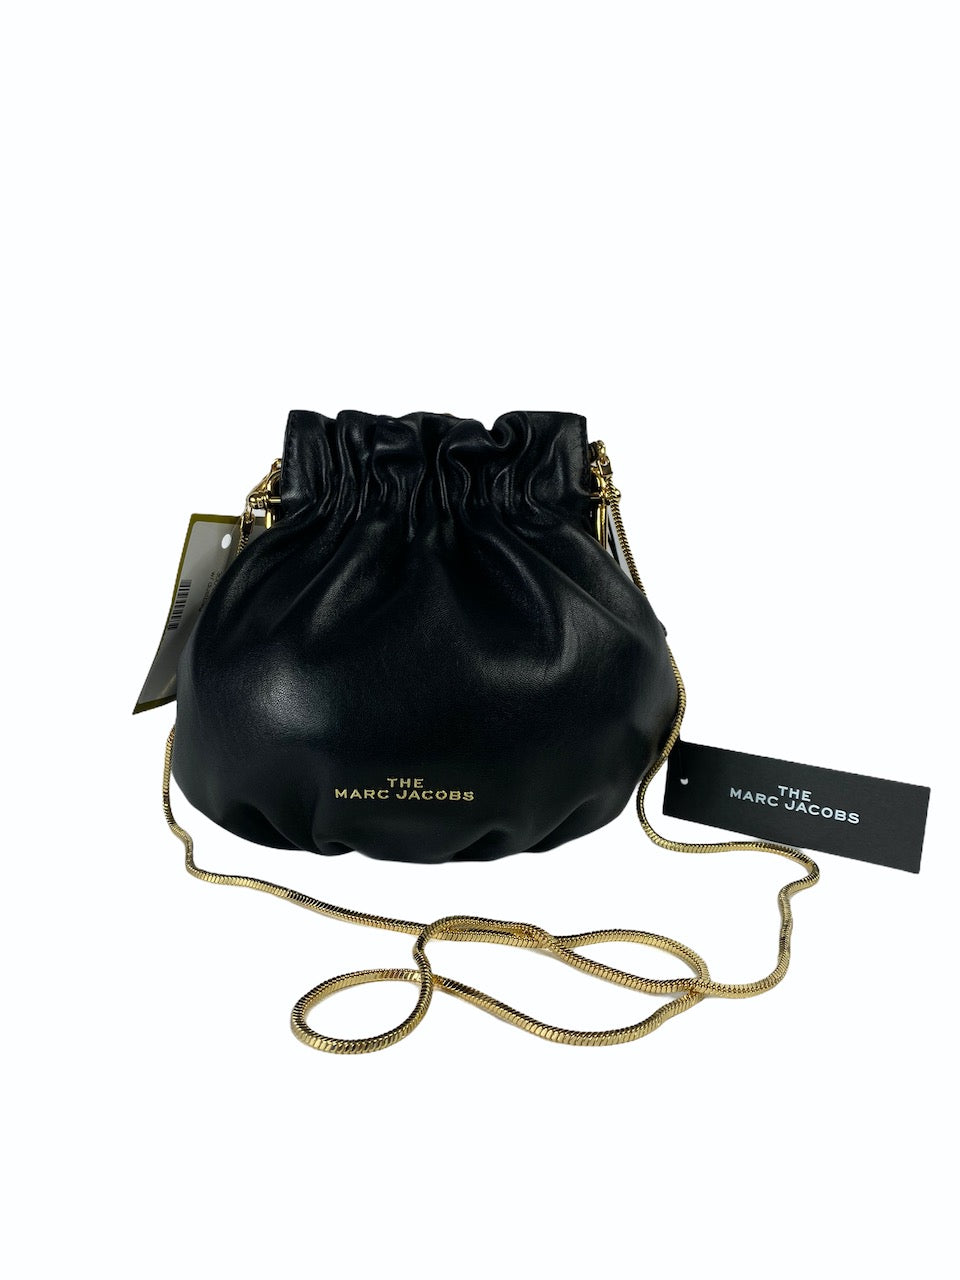 Marc Jacobs Black Leather "The Soiree" Mini Shoulder Bag - As Seen On Instagram 06/09/2020 - Siopaella Designer Exchange